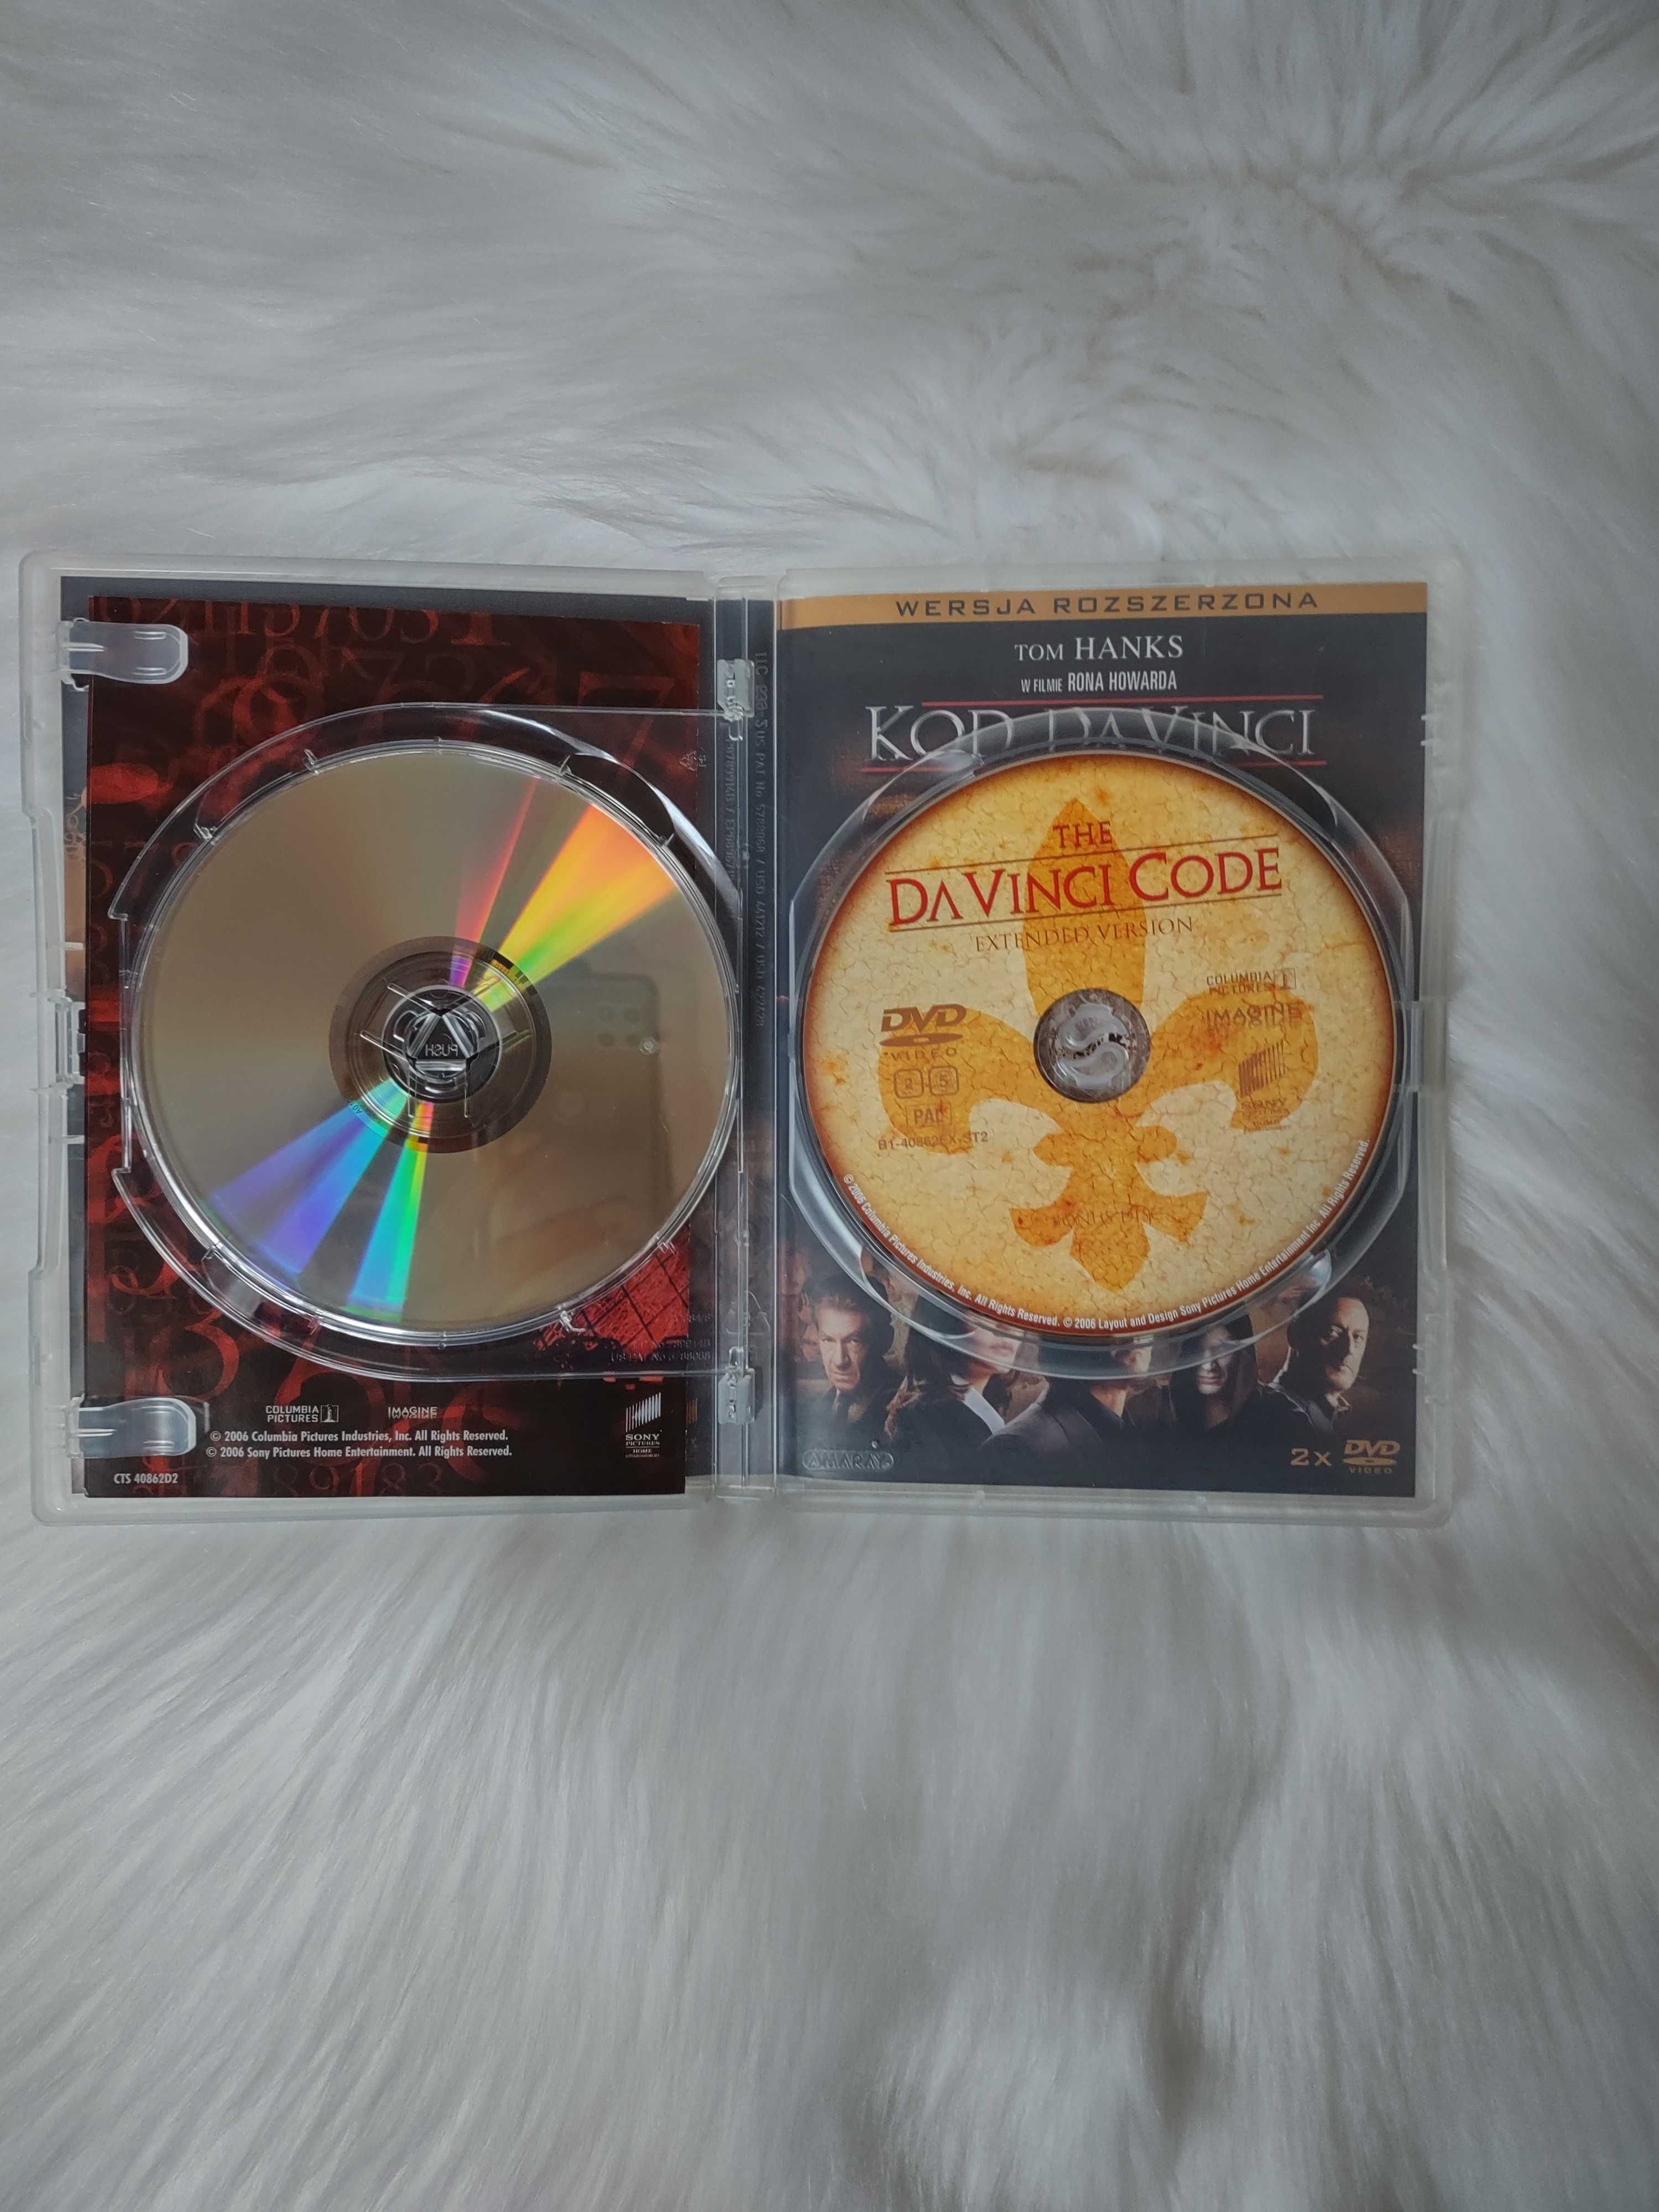 Film "Kod DaVinci" seria limitowana na DVD